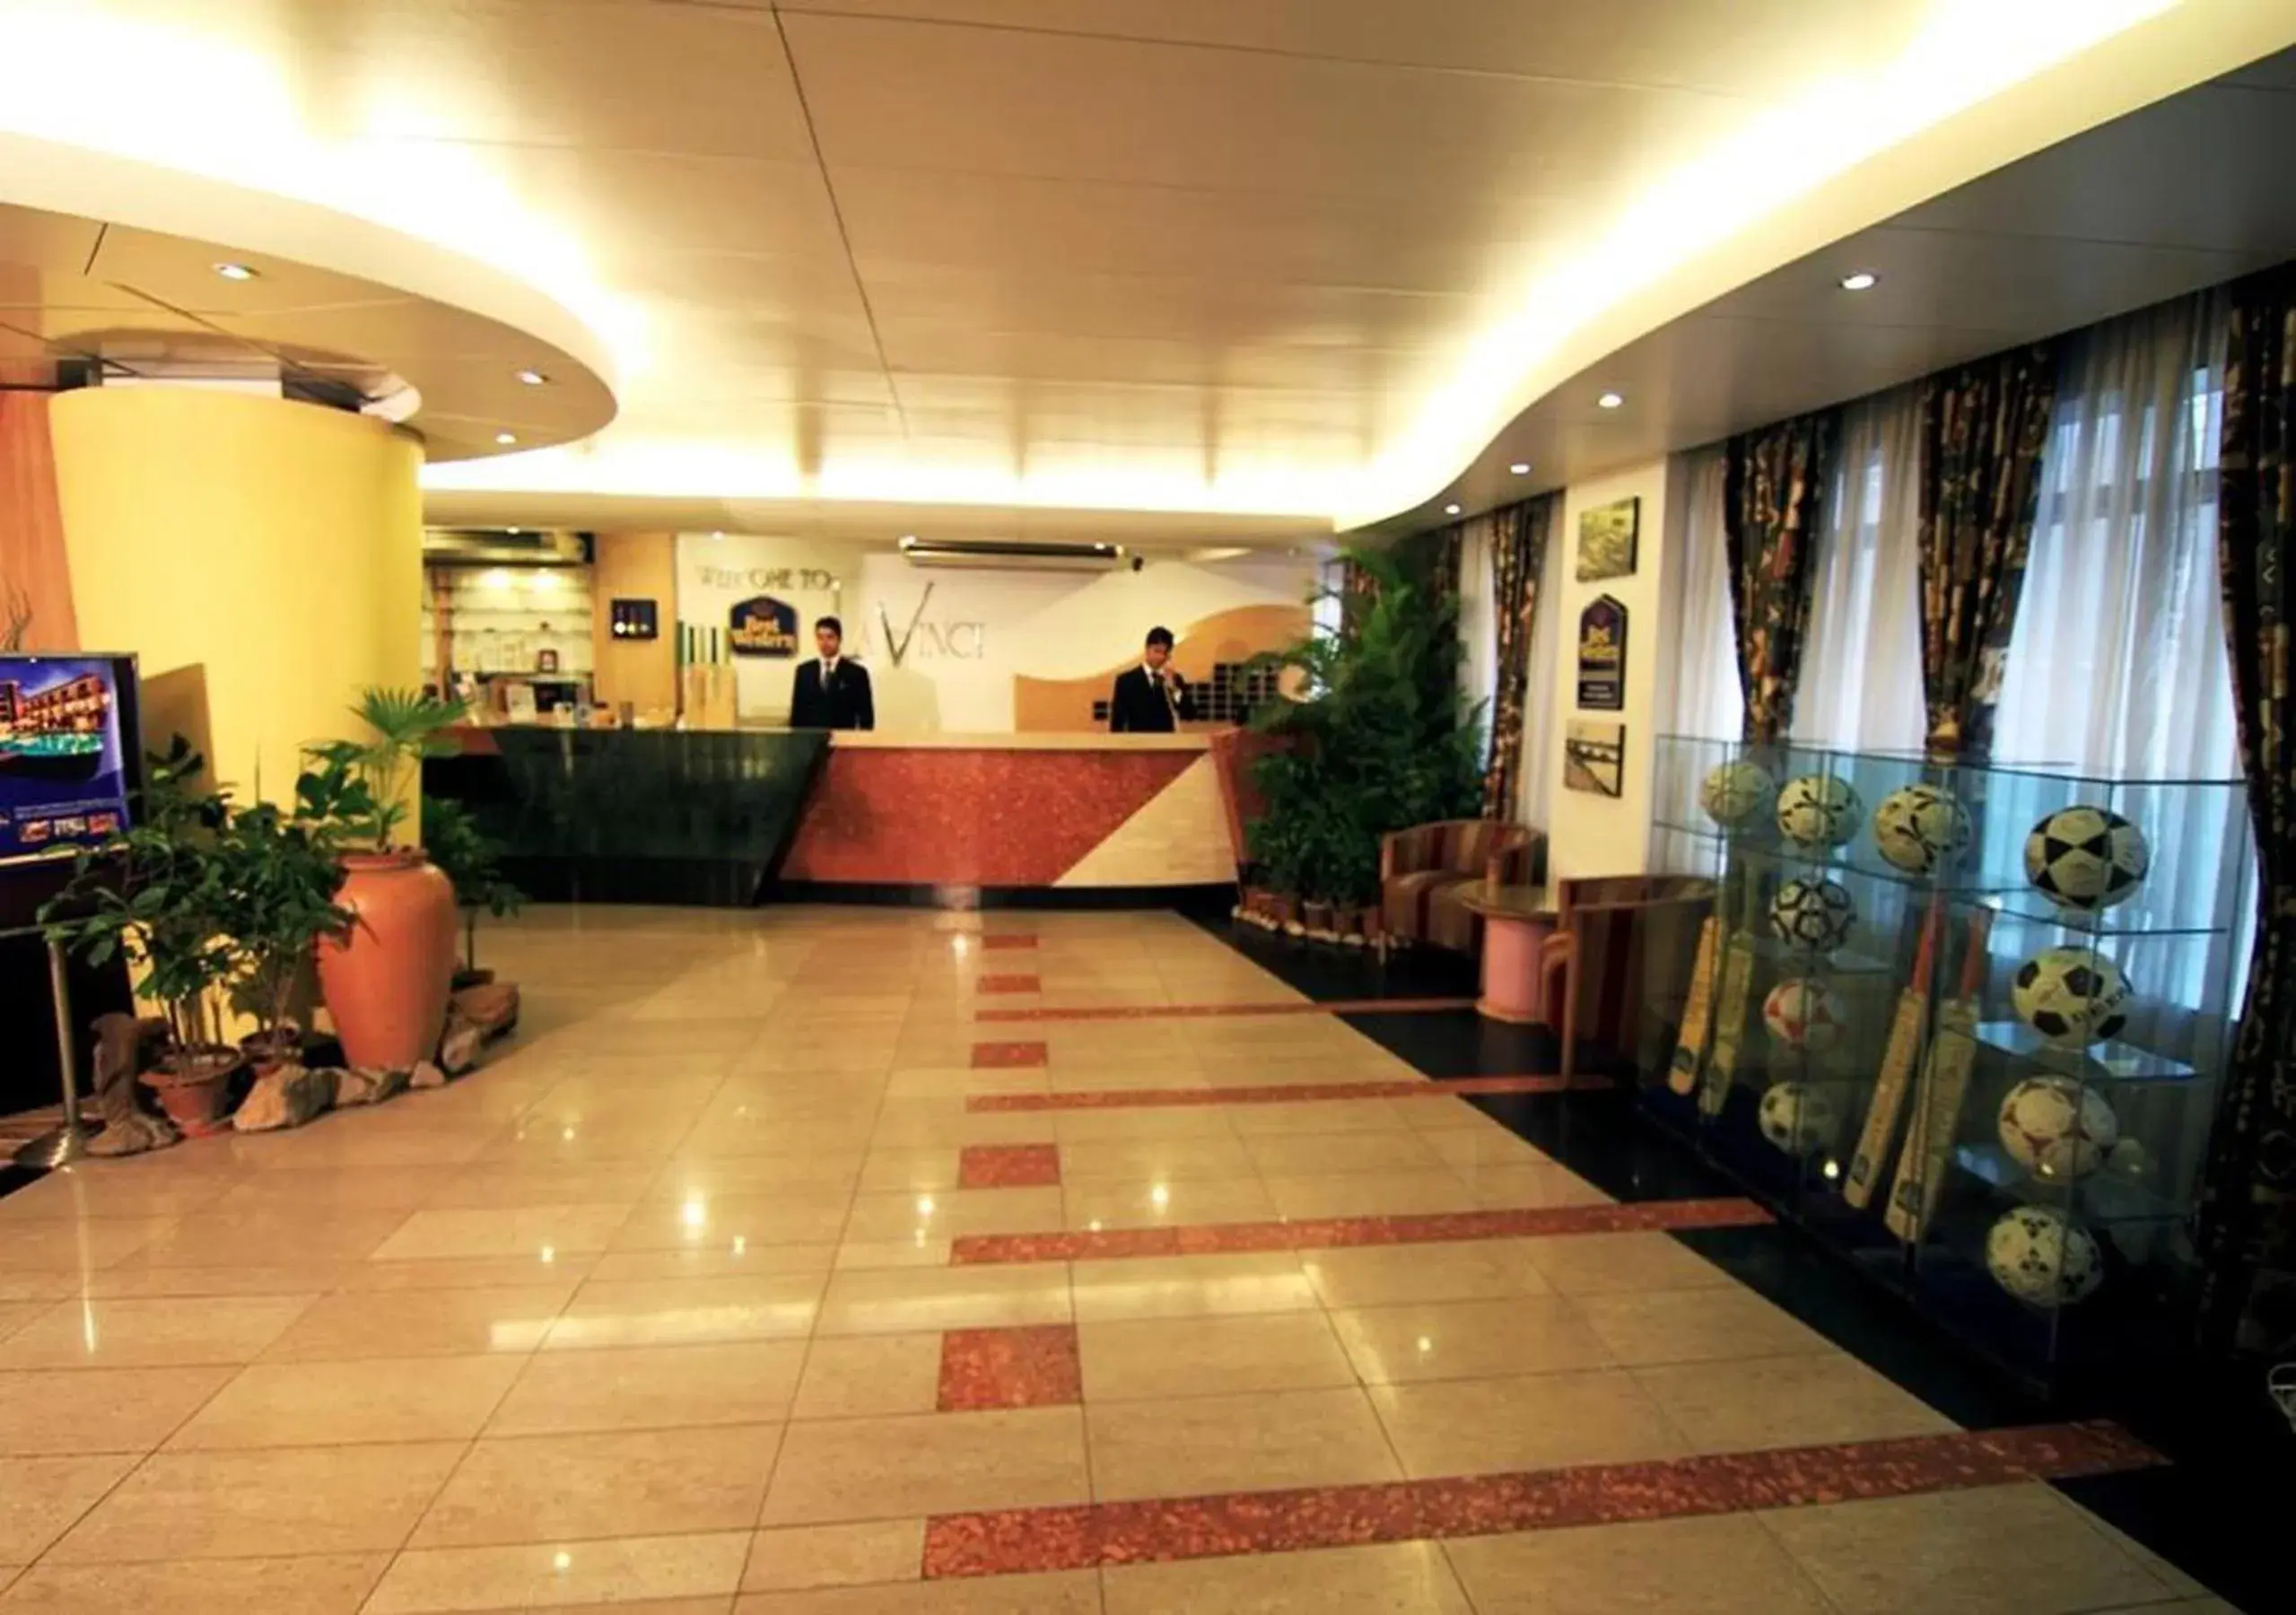 Lobby/Reception in La Vinci Hotel